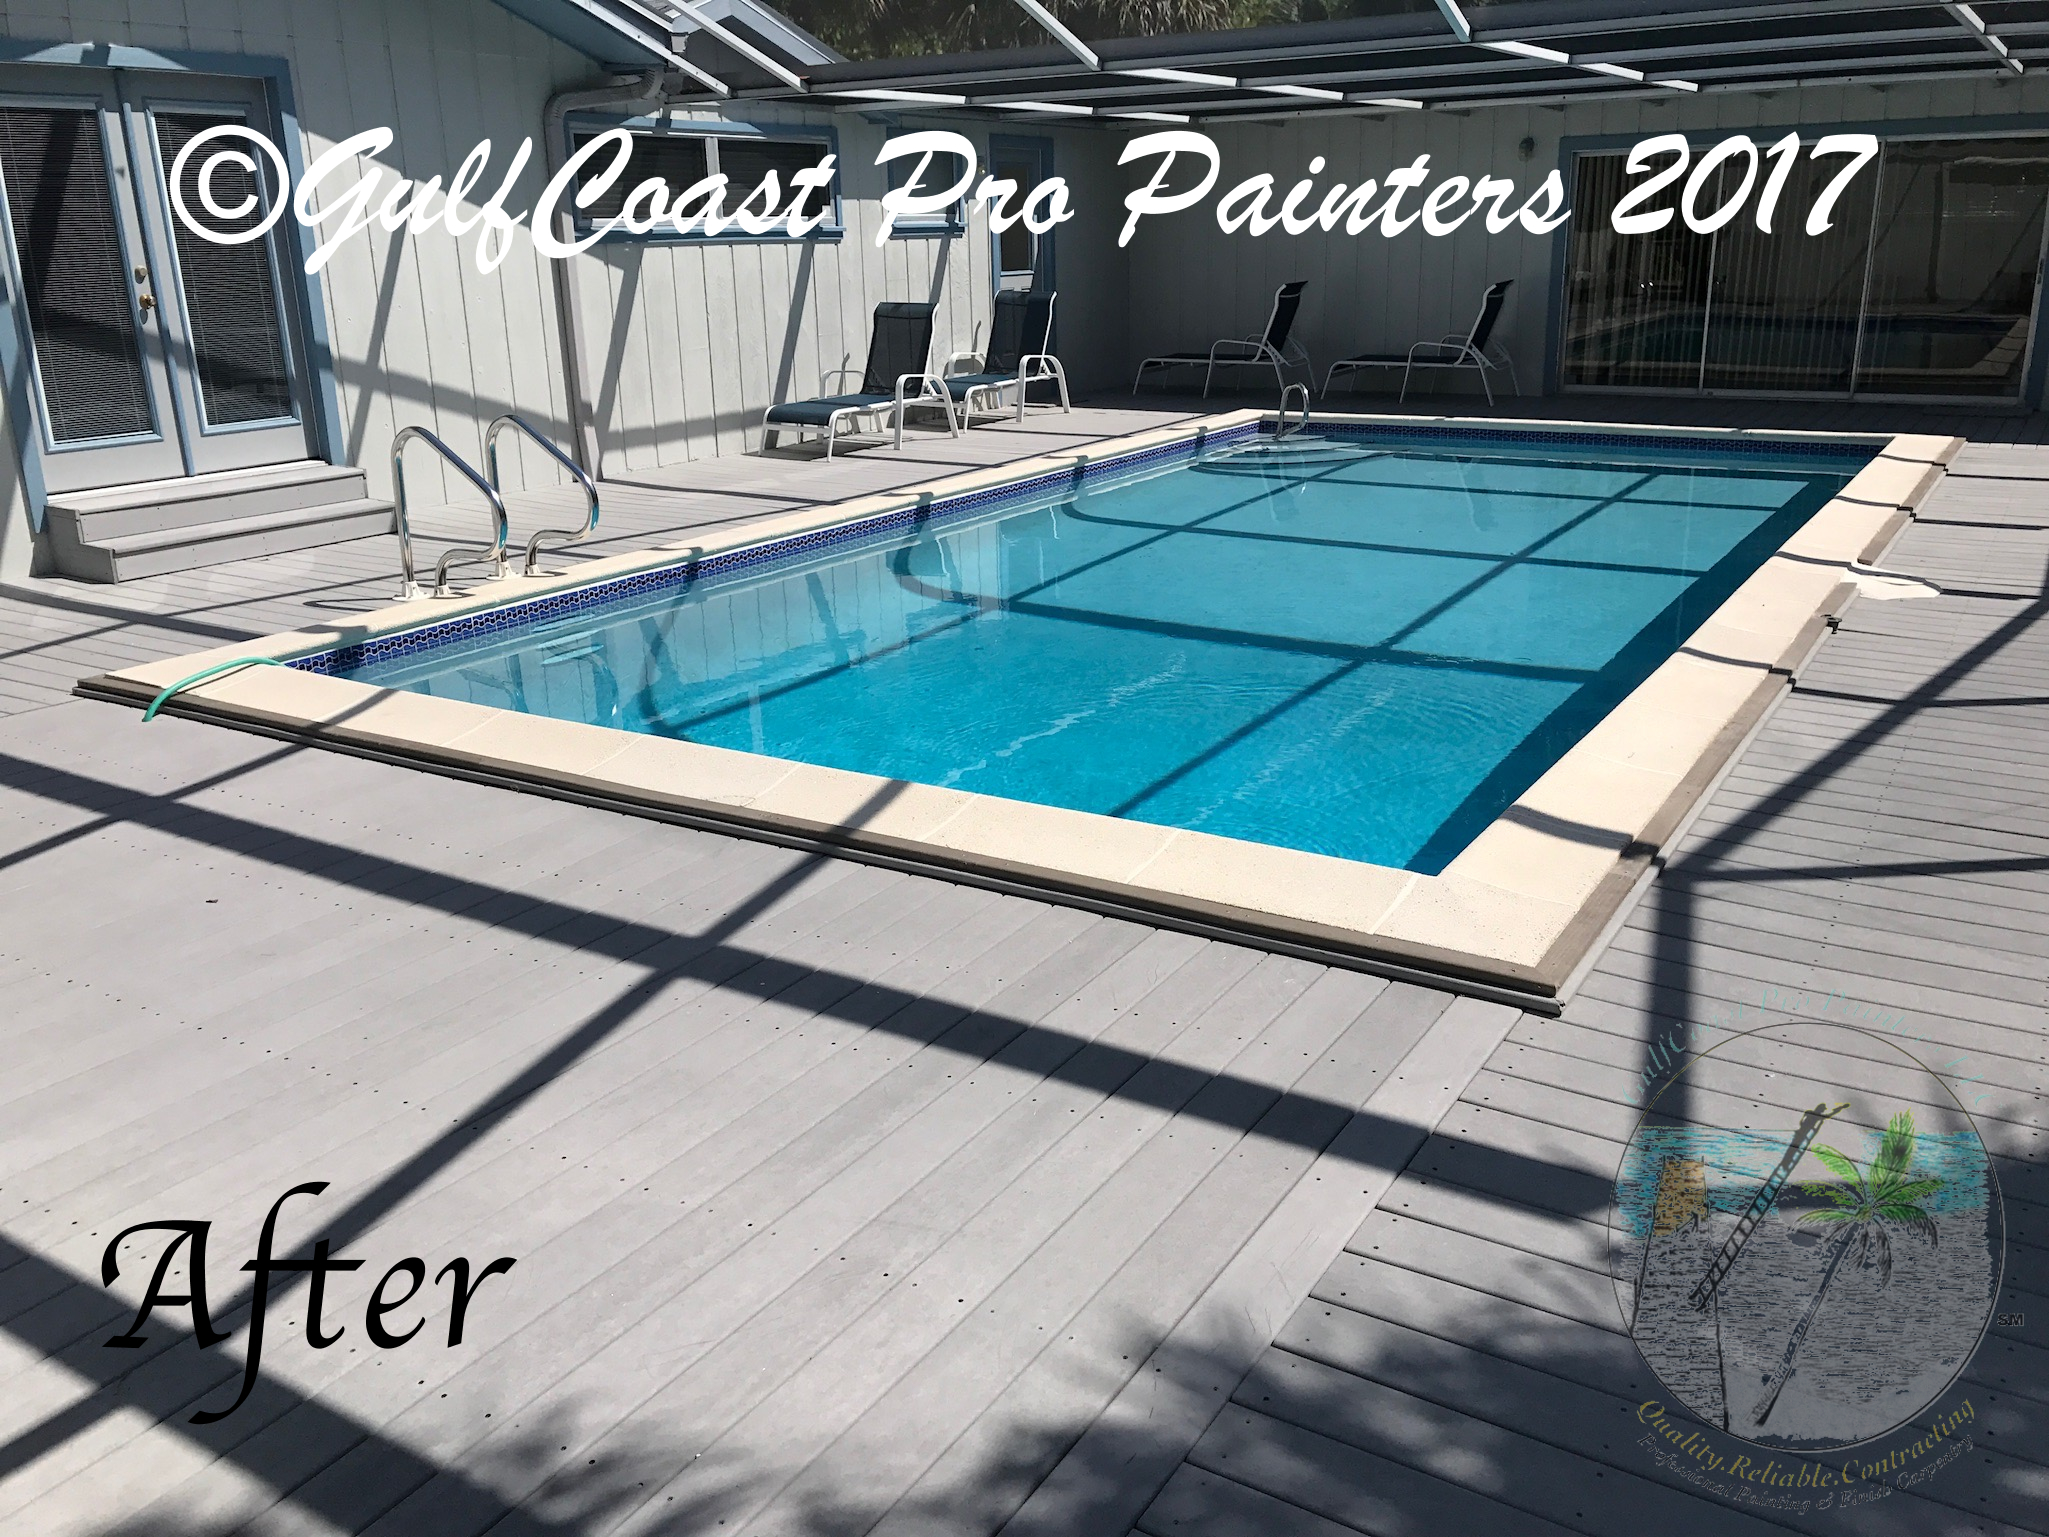 Pool Deck Trim Replacement June 2017 Watermarked3 (1).jpg